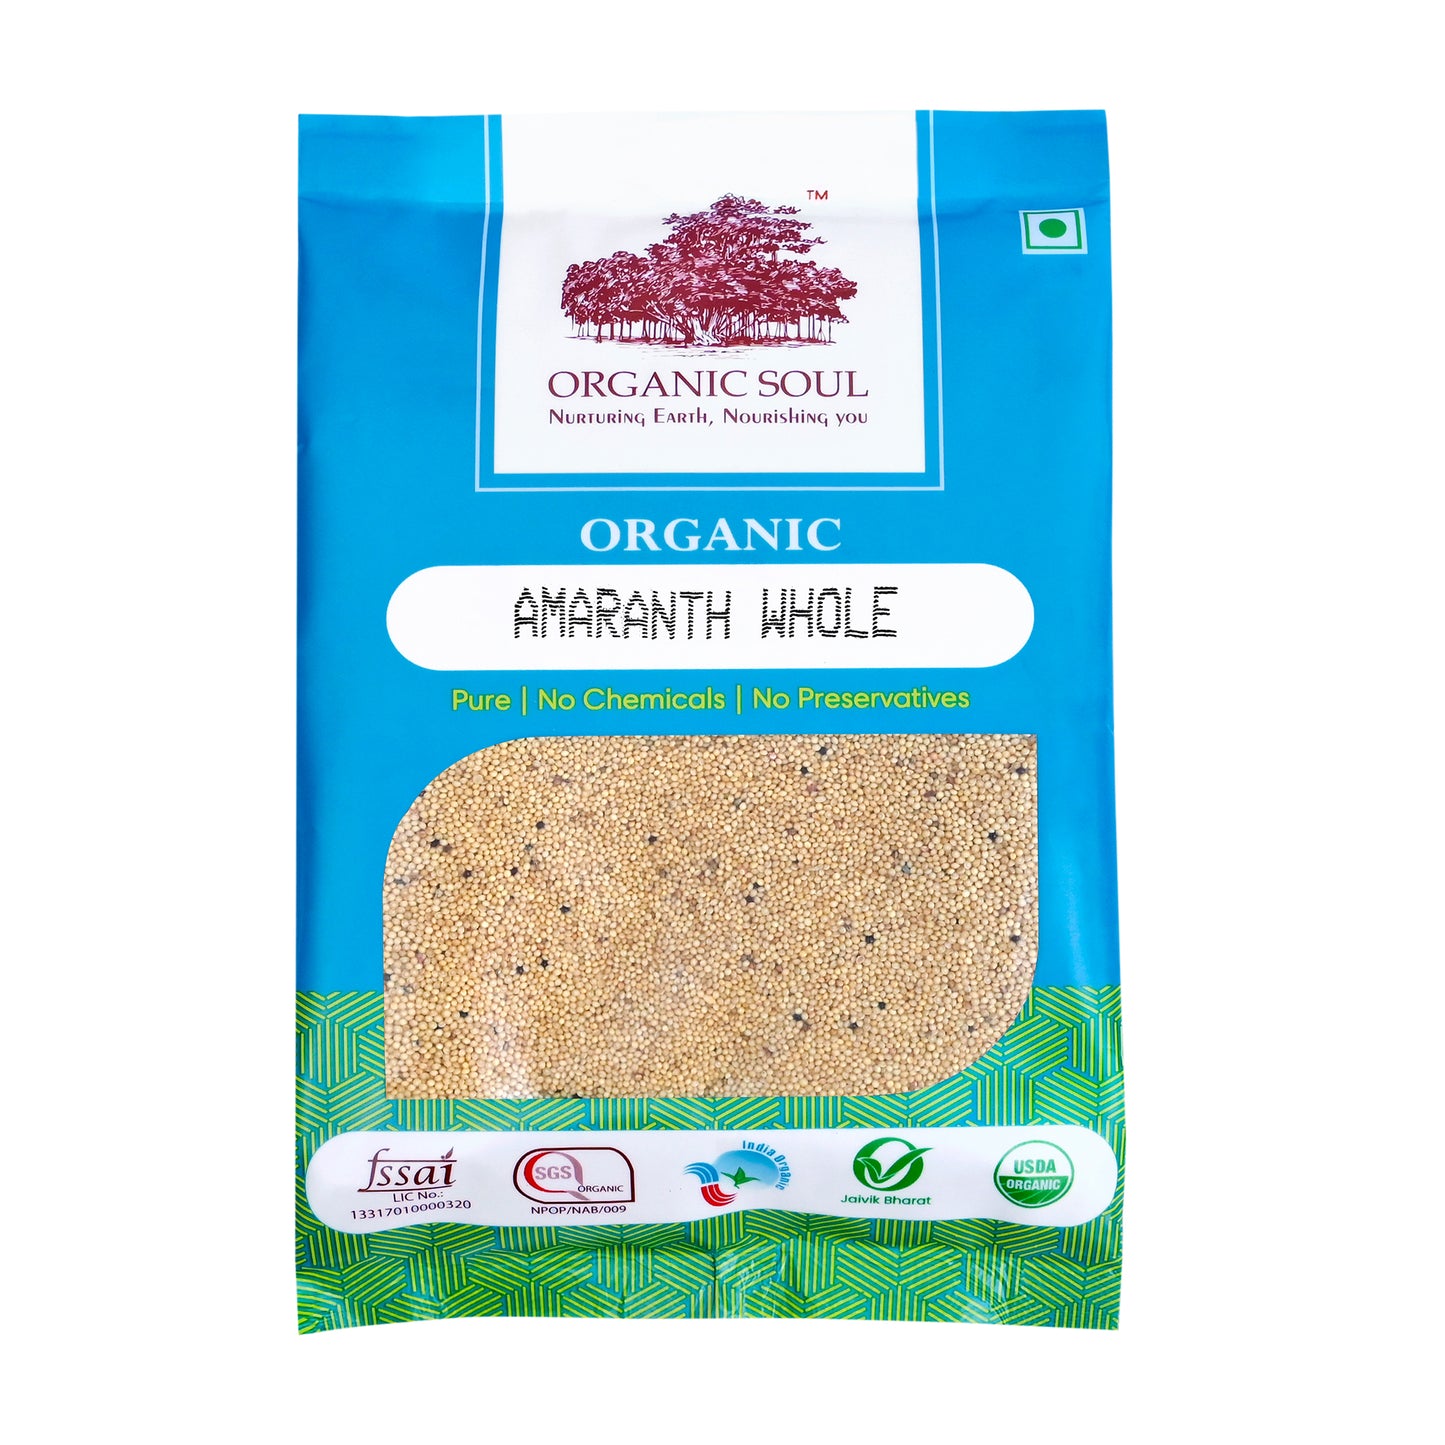 Organic Amaranth Grain (Seeds/Whole) - (450 gm or 900 gm)| Ramdana/Rajgira Sabut | Organic Soul